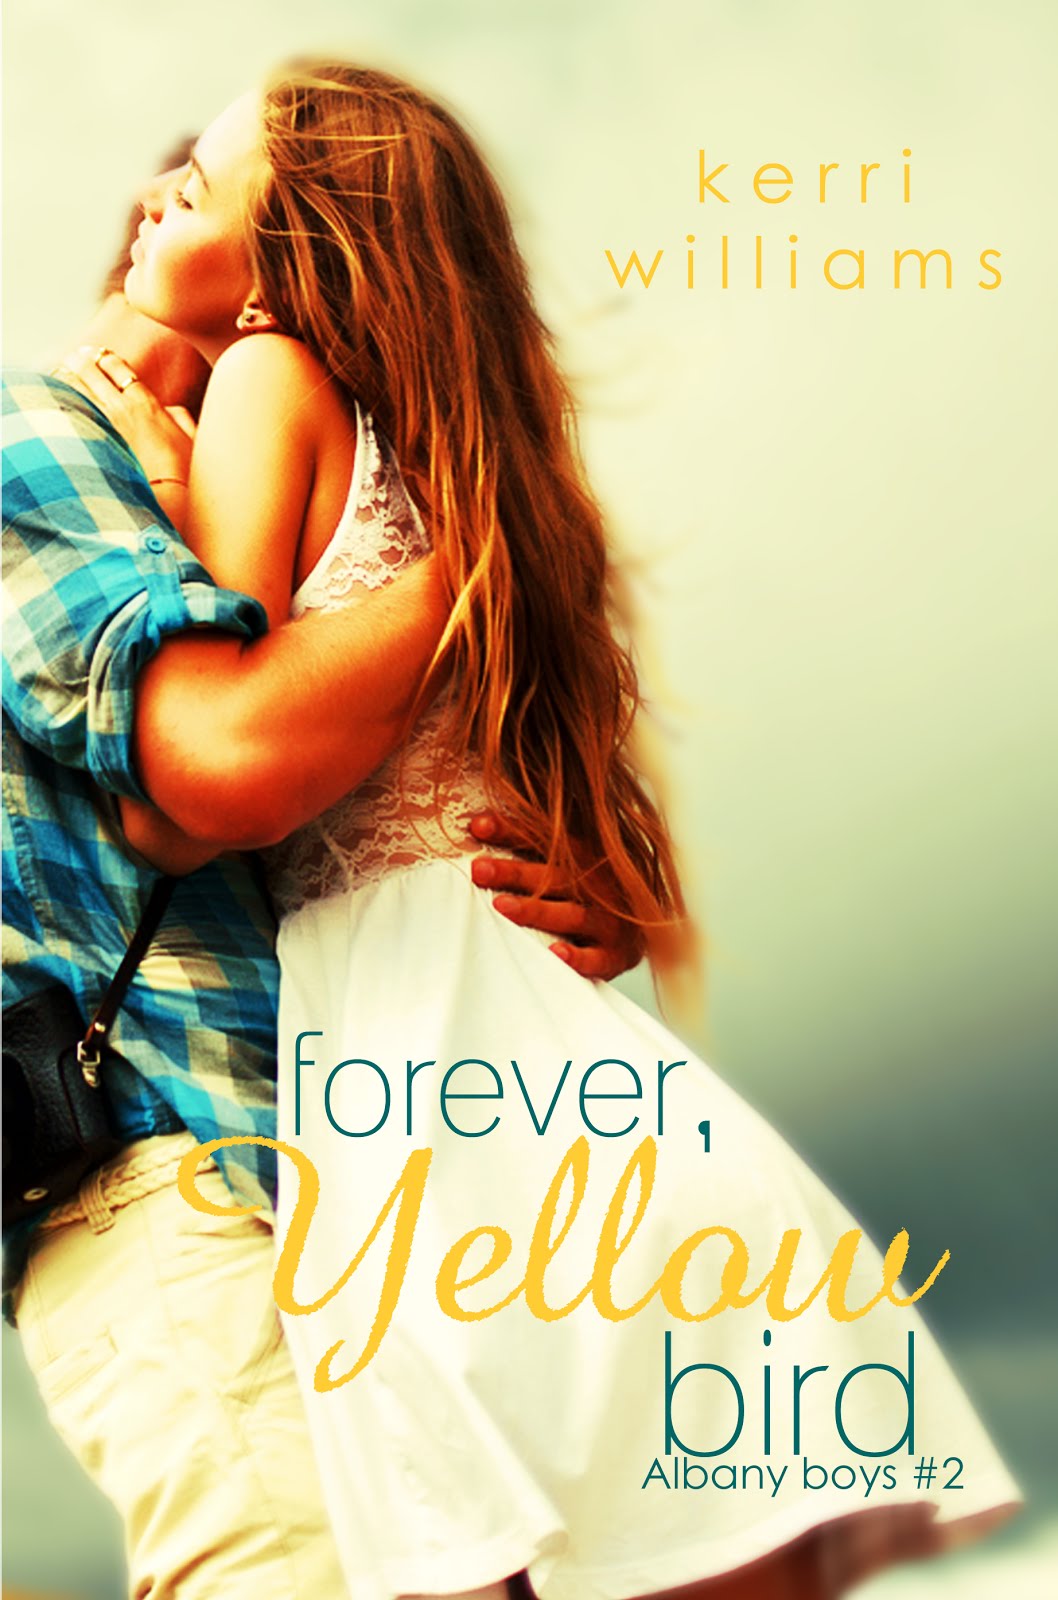 Forever, Yellow Bird (An Albany Boys novel #2)